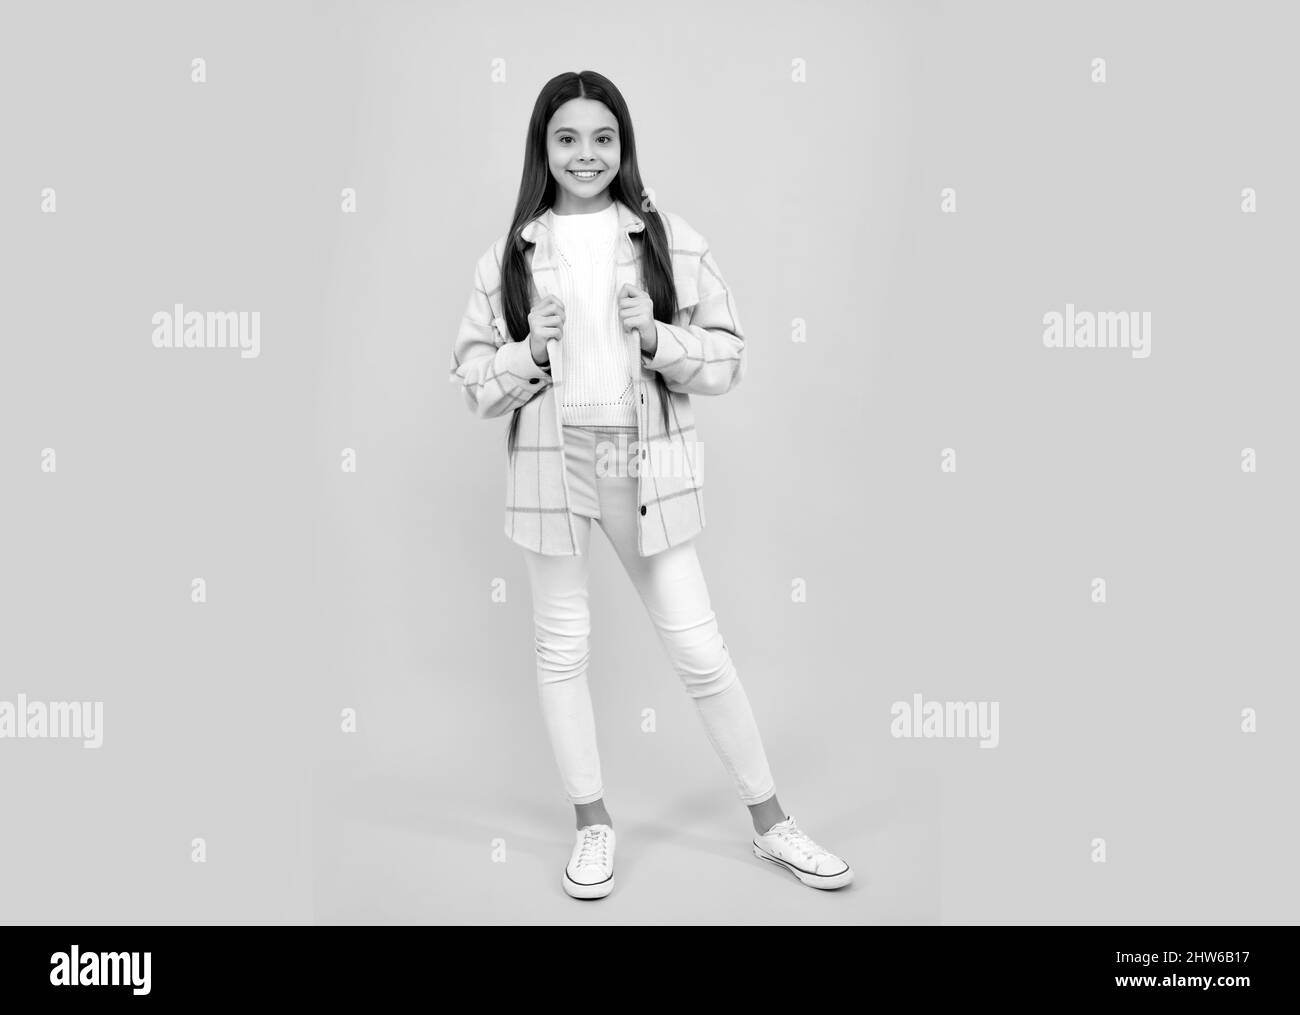 happy kid girl wear pink checkered shirt, childhood Stock Photo - Alamy